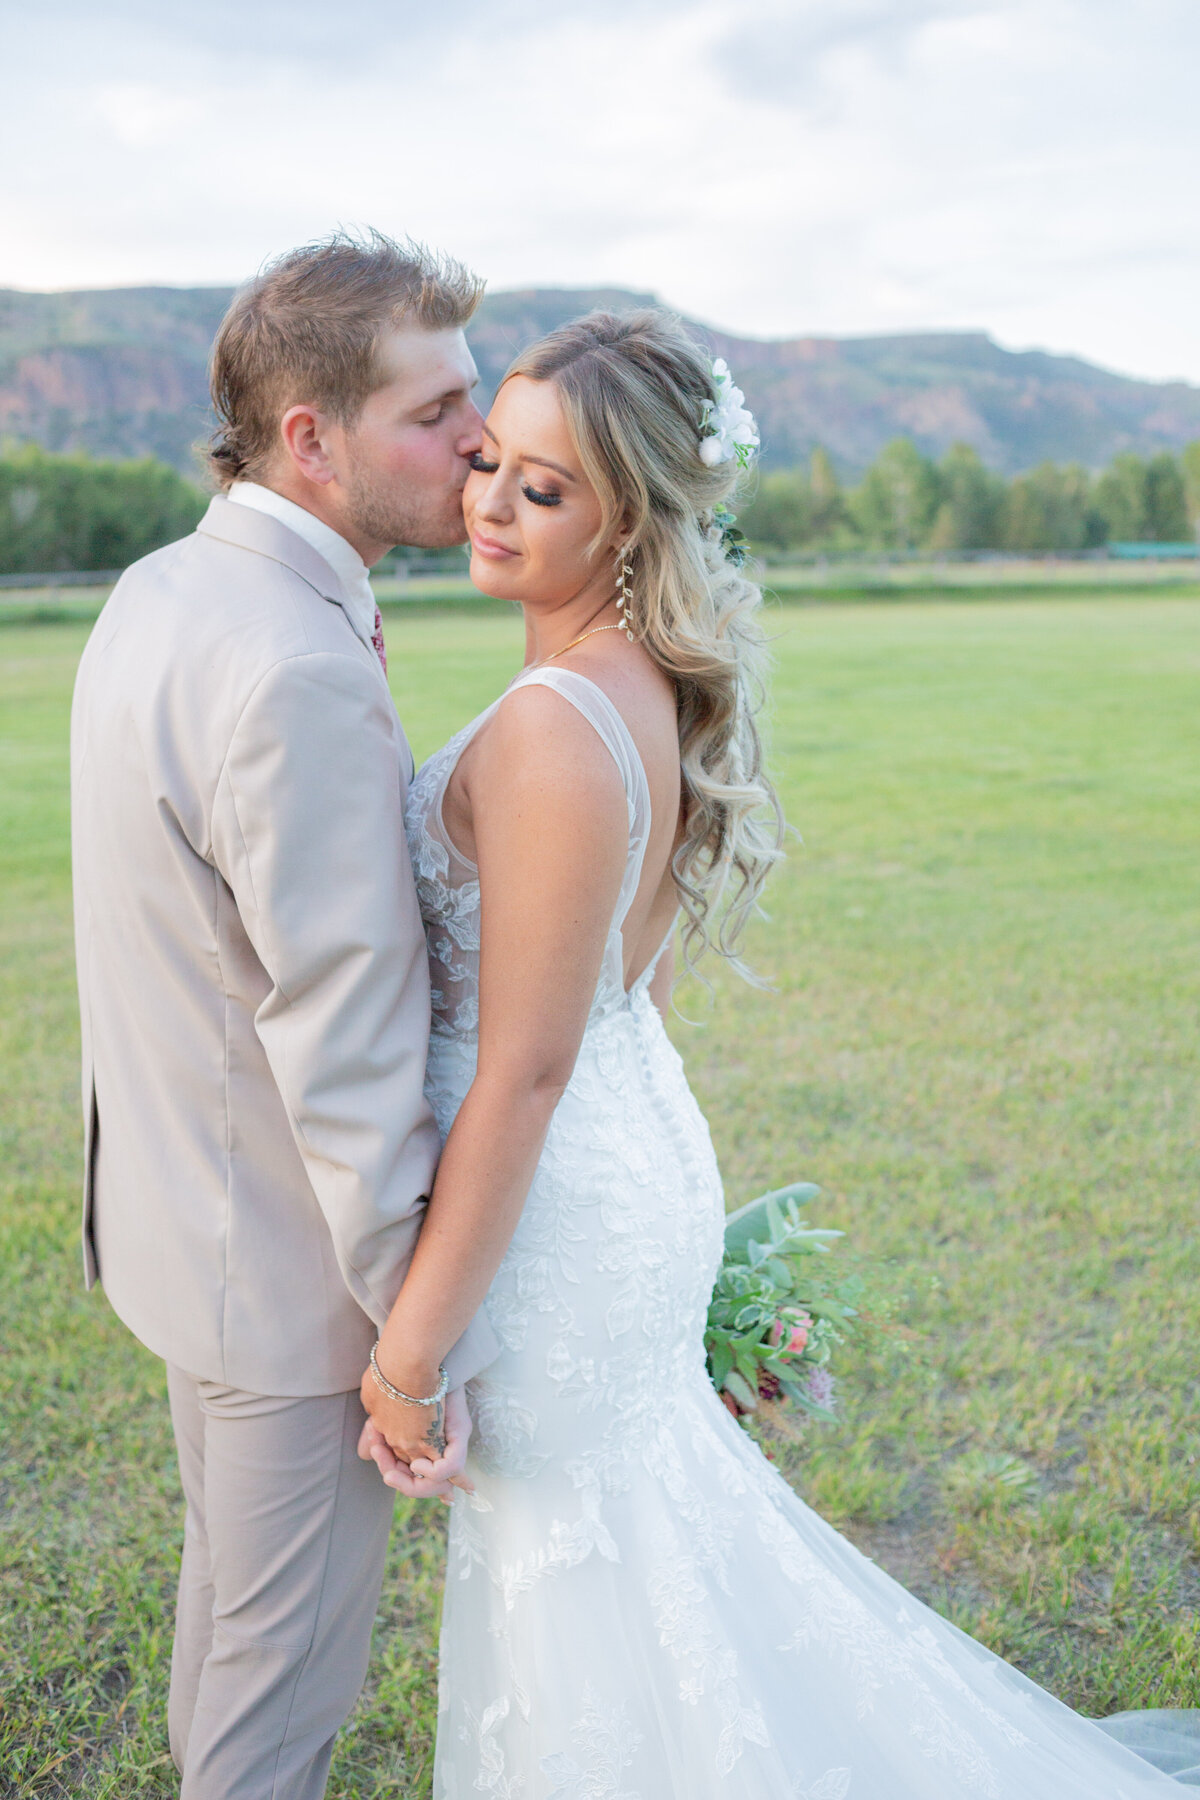 Idaho Falls Photographers capture groom kissing bride's cheek during outdoor elopement photos